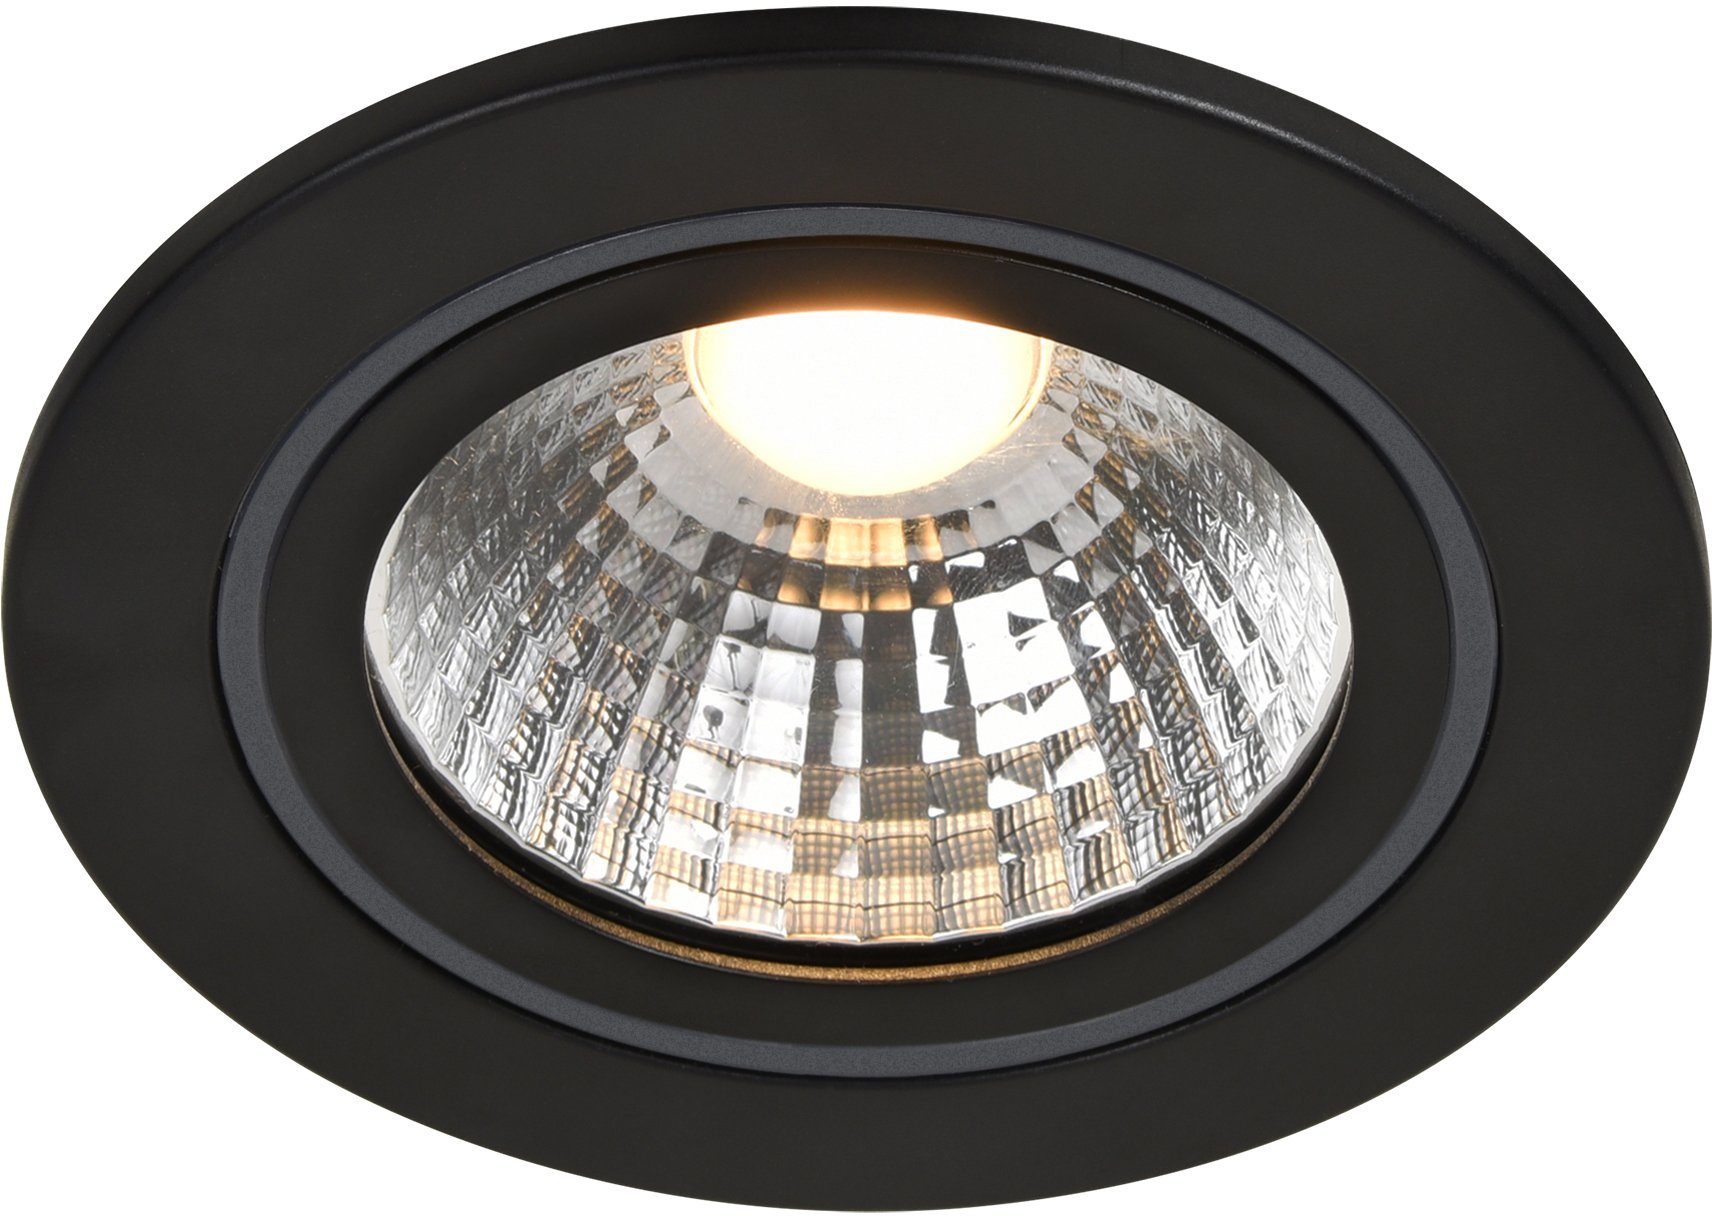 Nordlux Deckenstrahler Alec, LED fest integriert, Warmweiß, inkl. 6W LED, 480 Lumen, inkl. 3 Stufen Dimmer